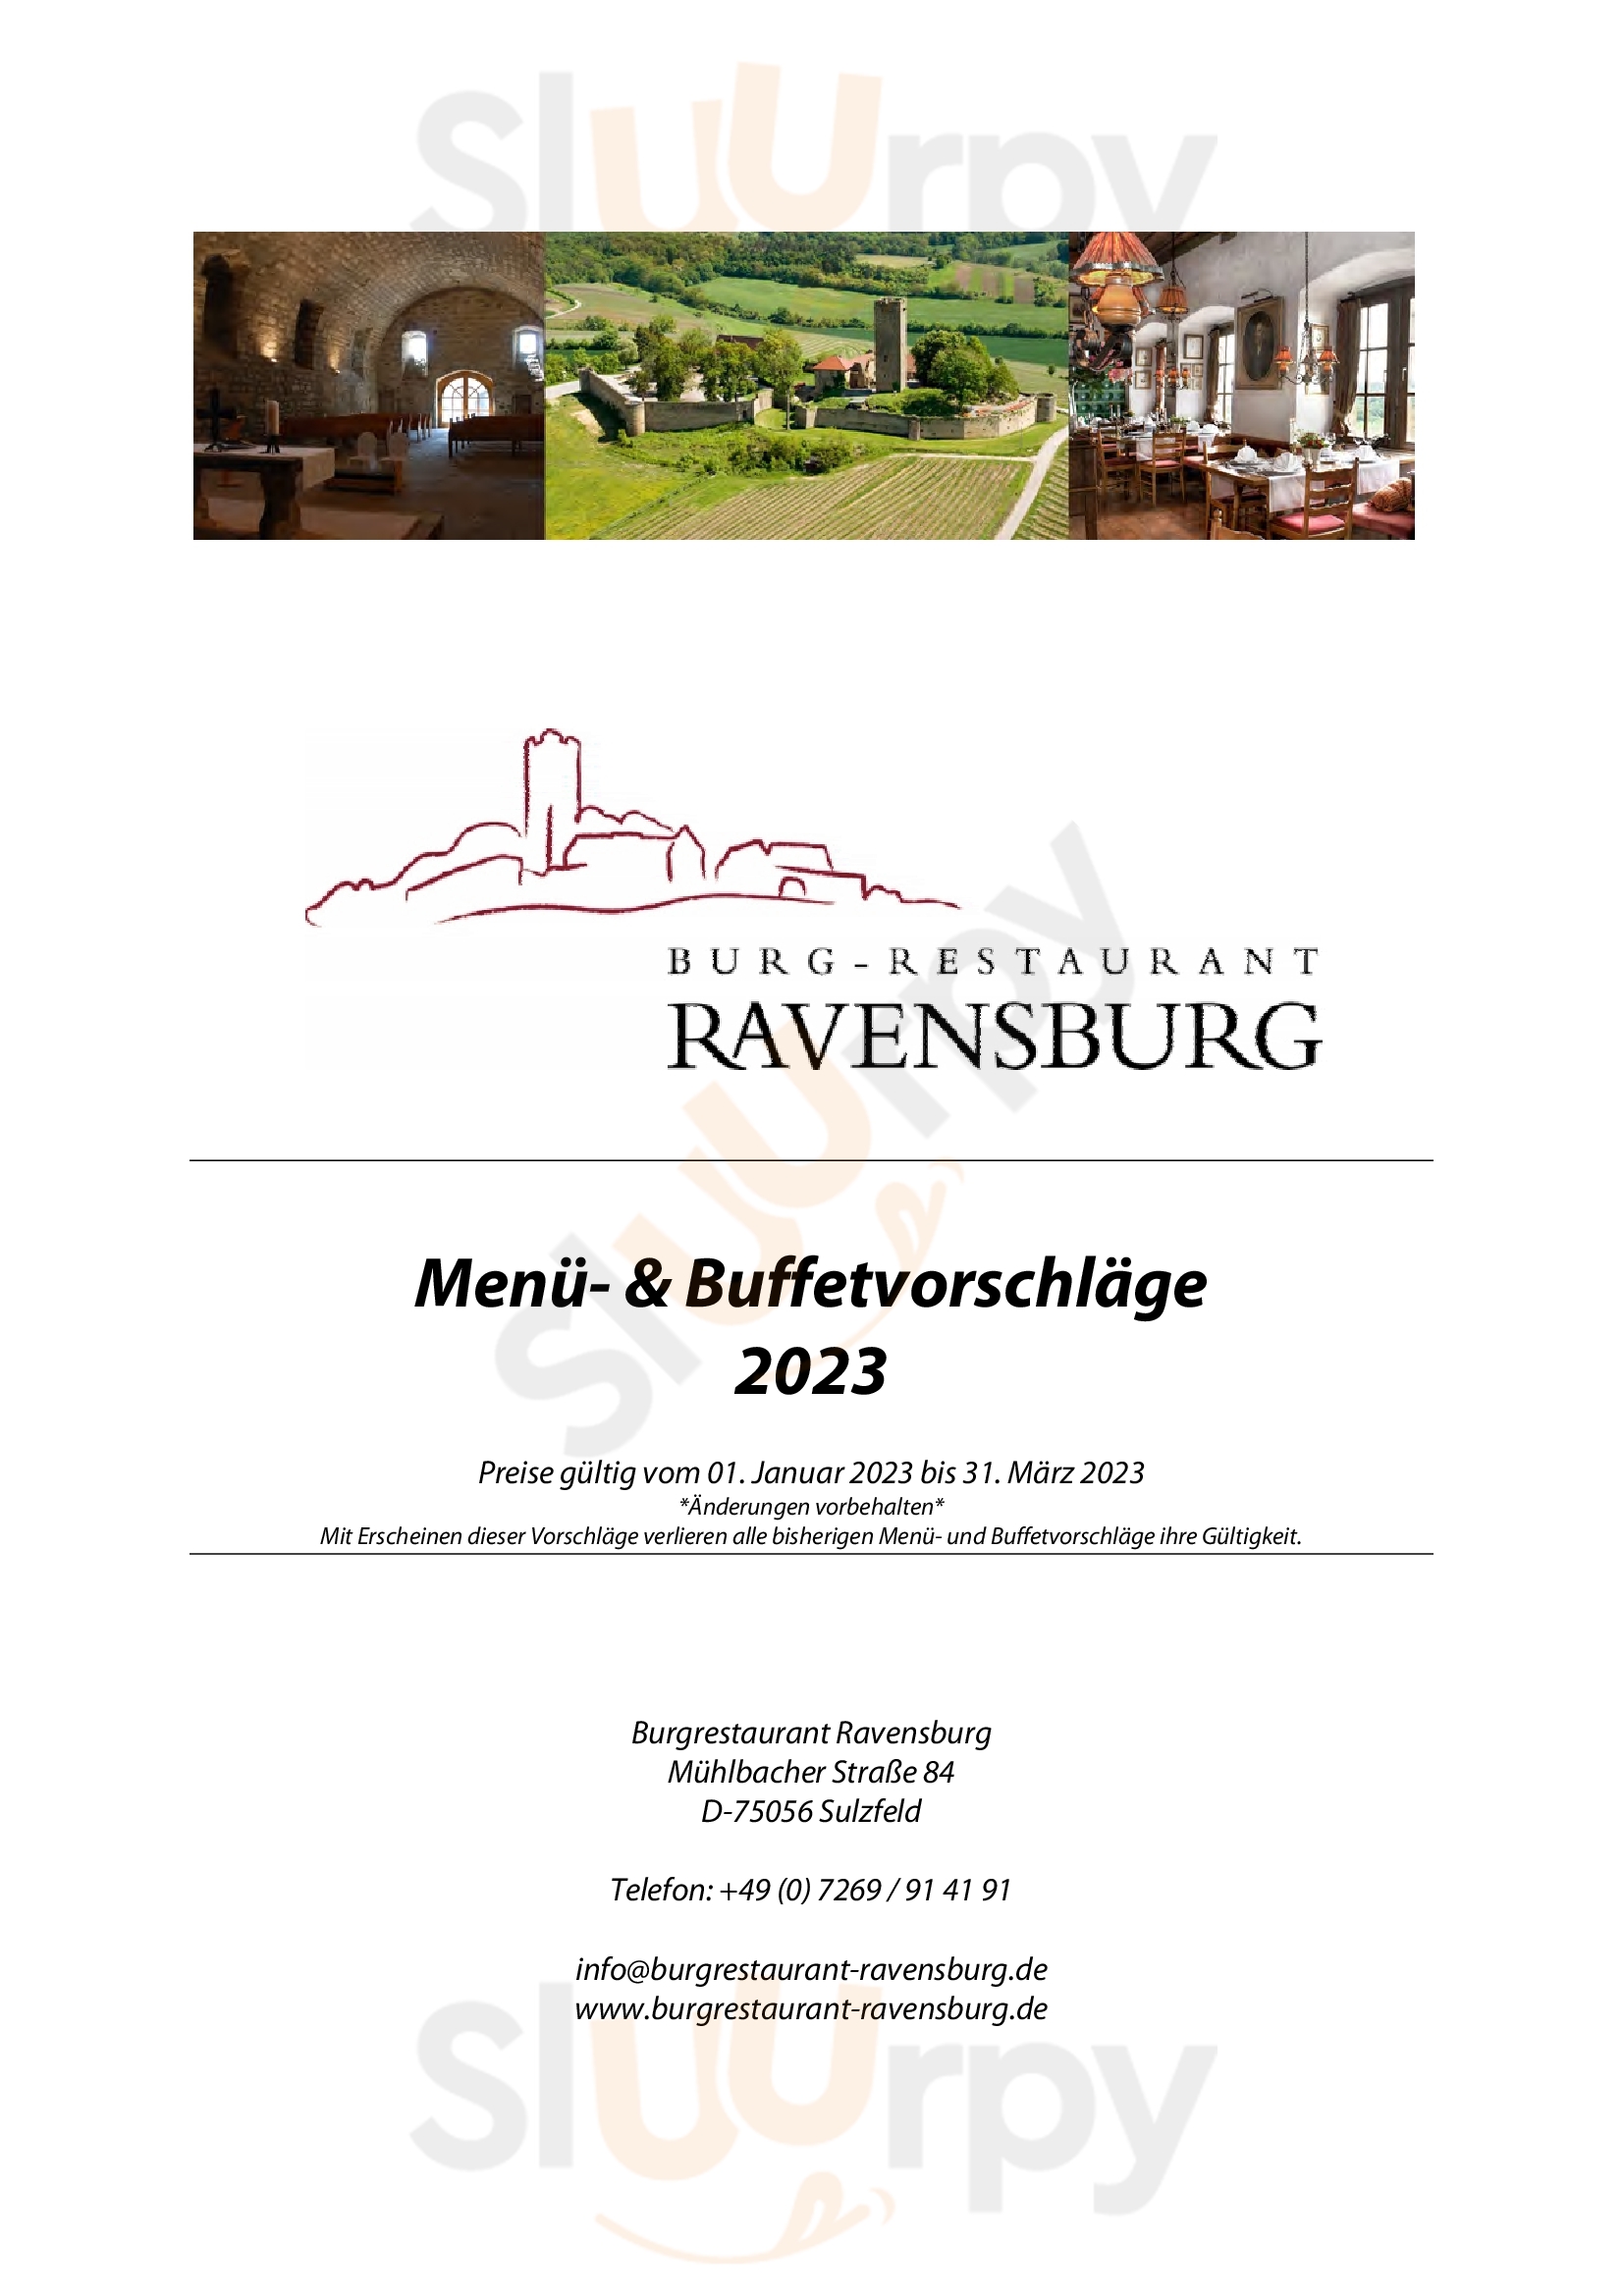 Burgrestaurant Ravensburg Sulzfeld Menu - 1